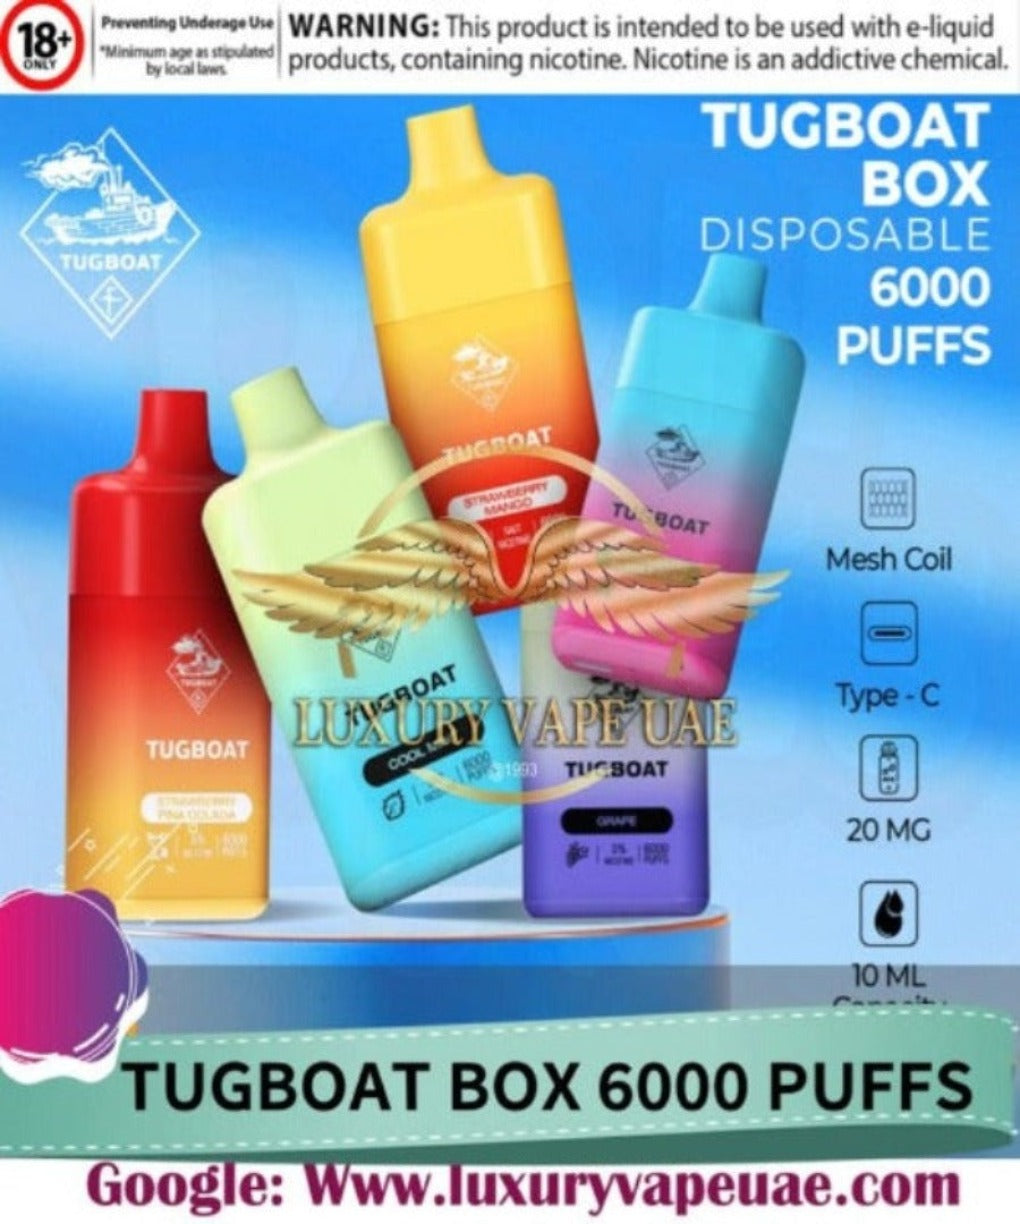 TUGBOAT BOX 6000 PUFFS